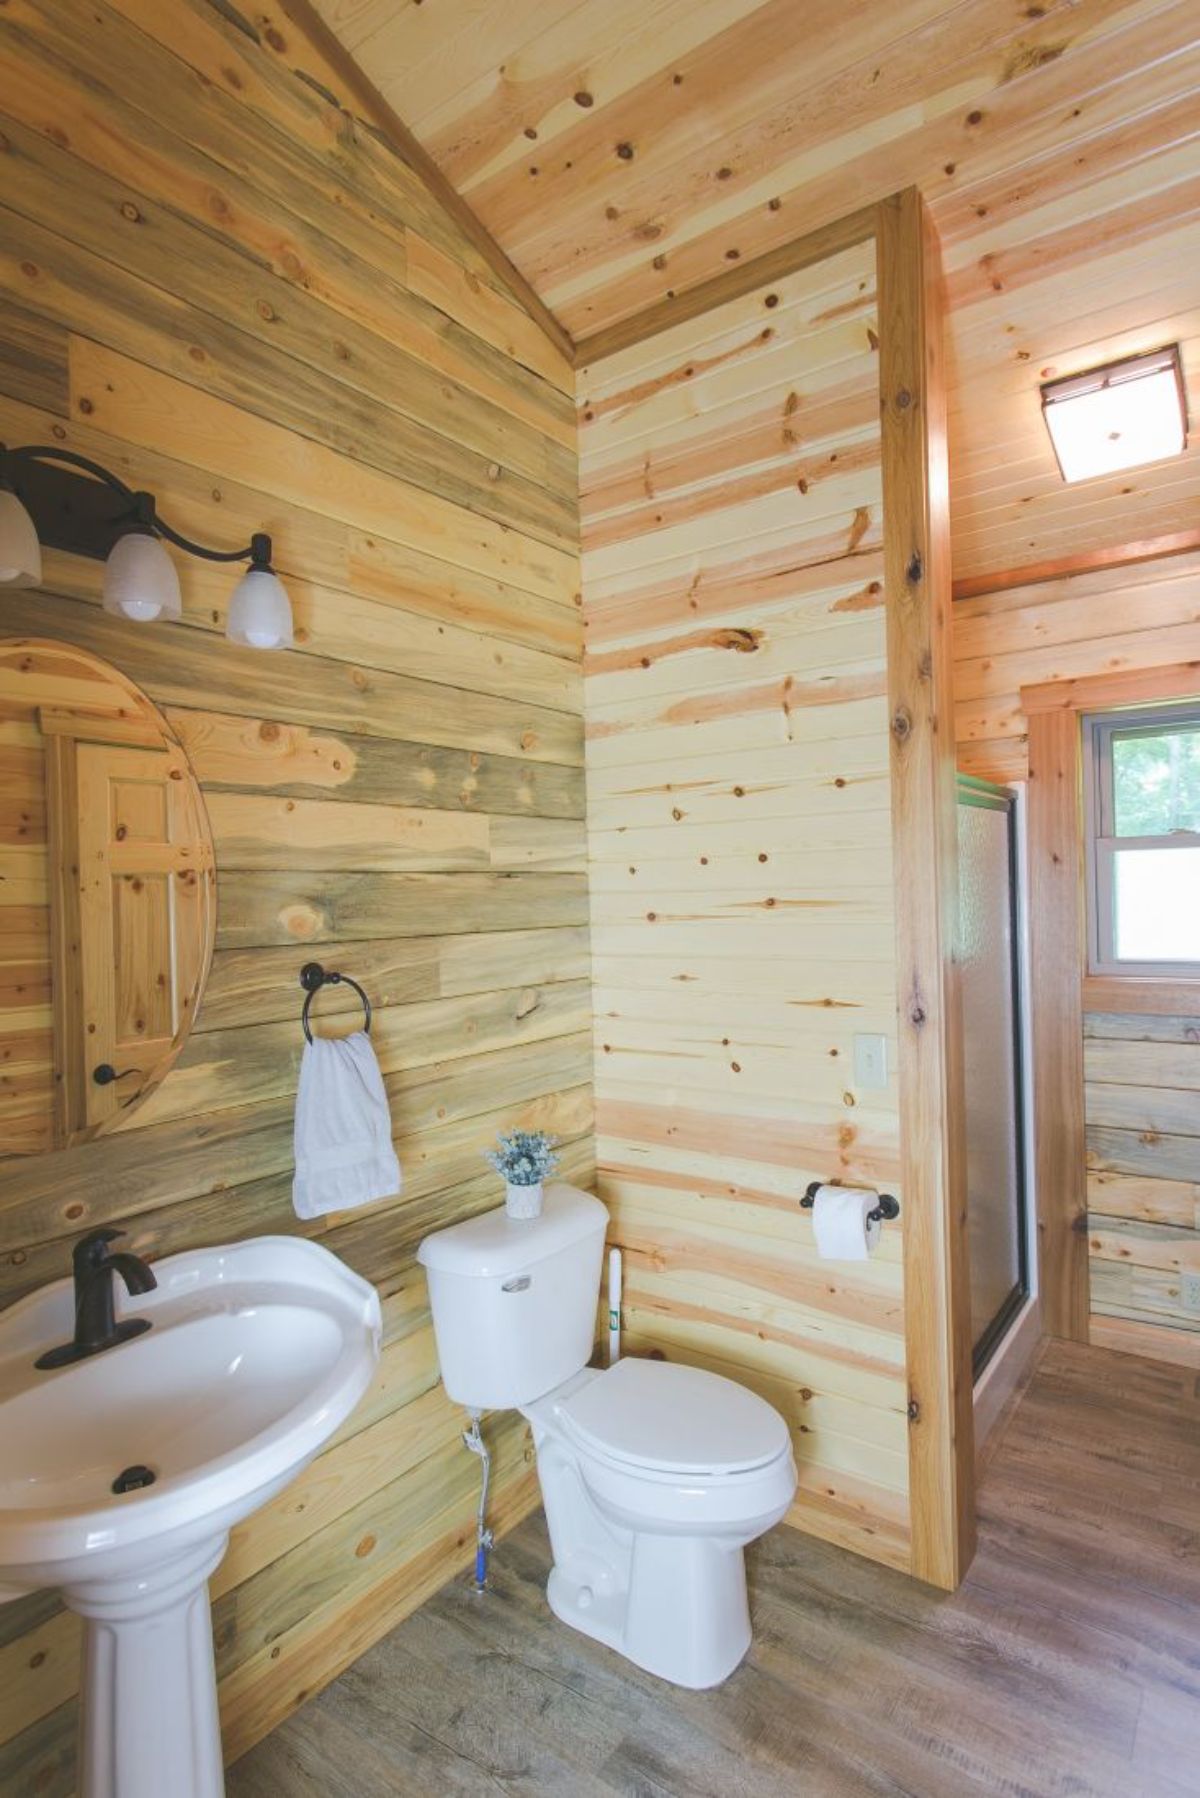 white pedastal sink next to white toilet in bathroom with wood walls